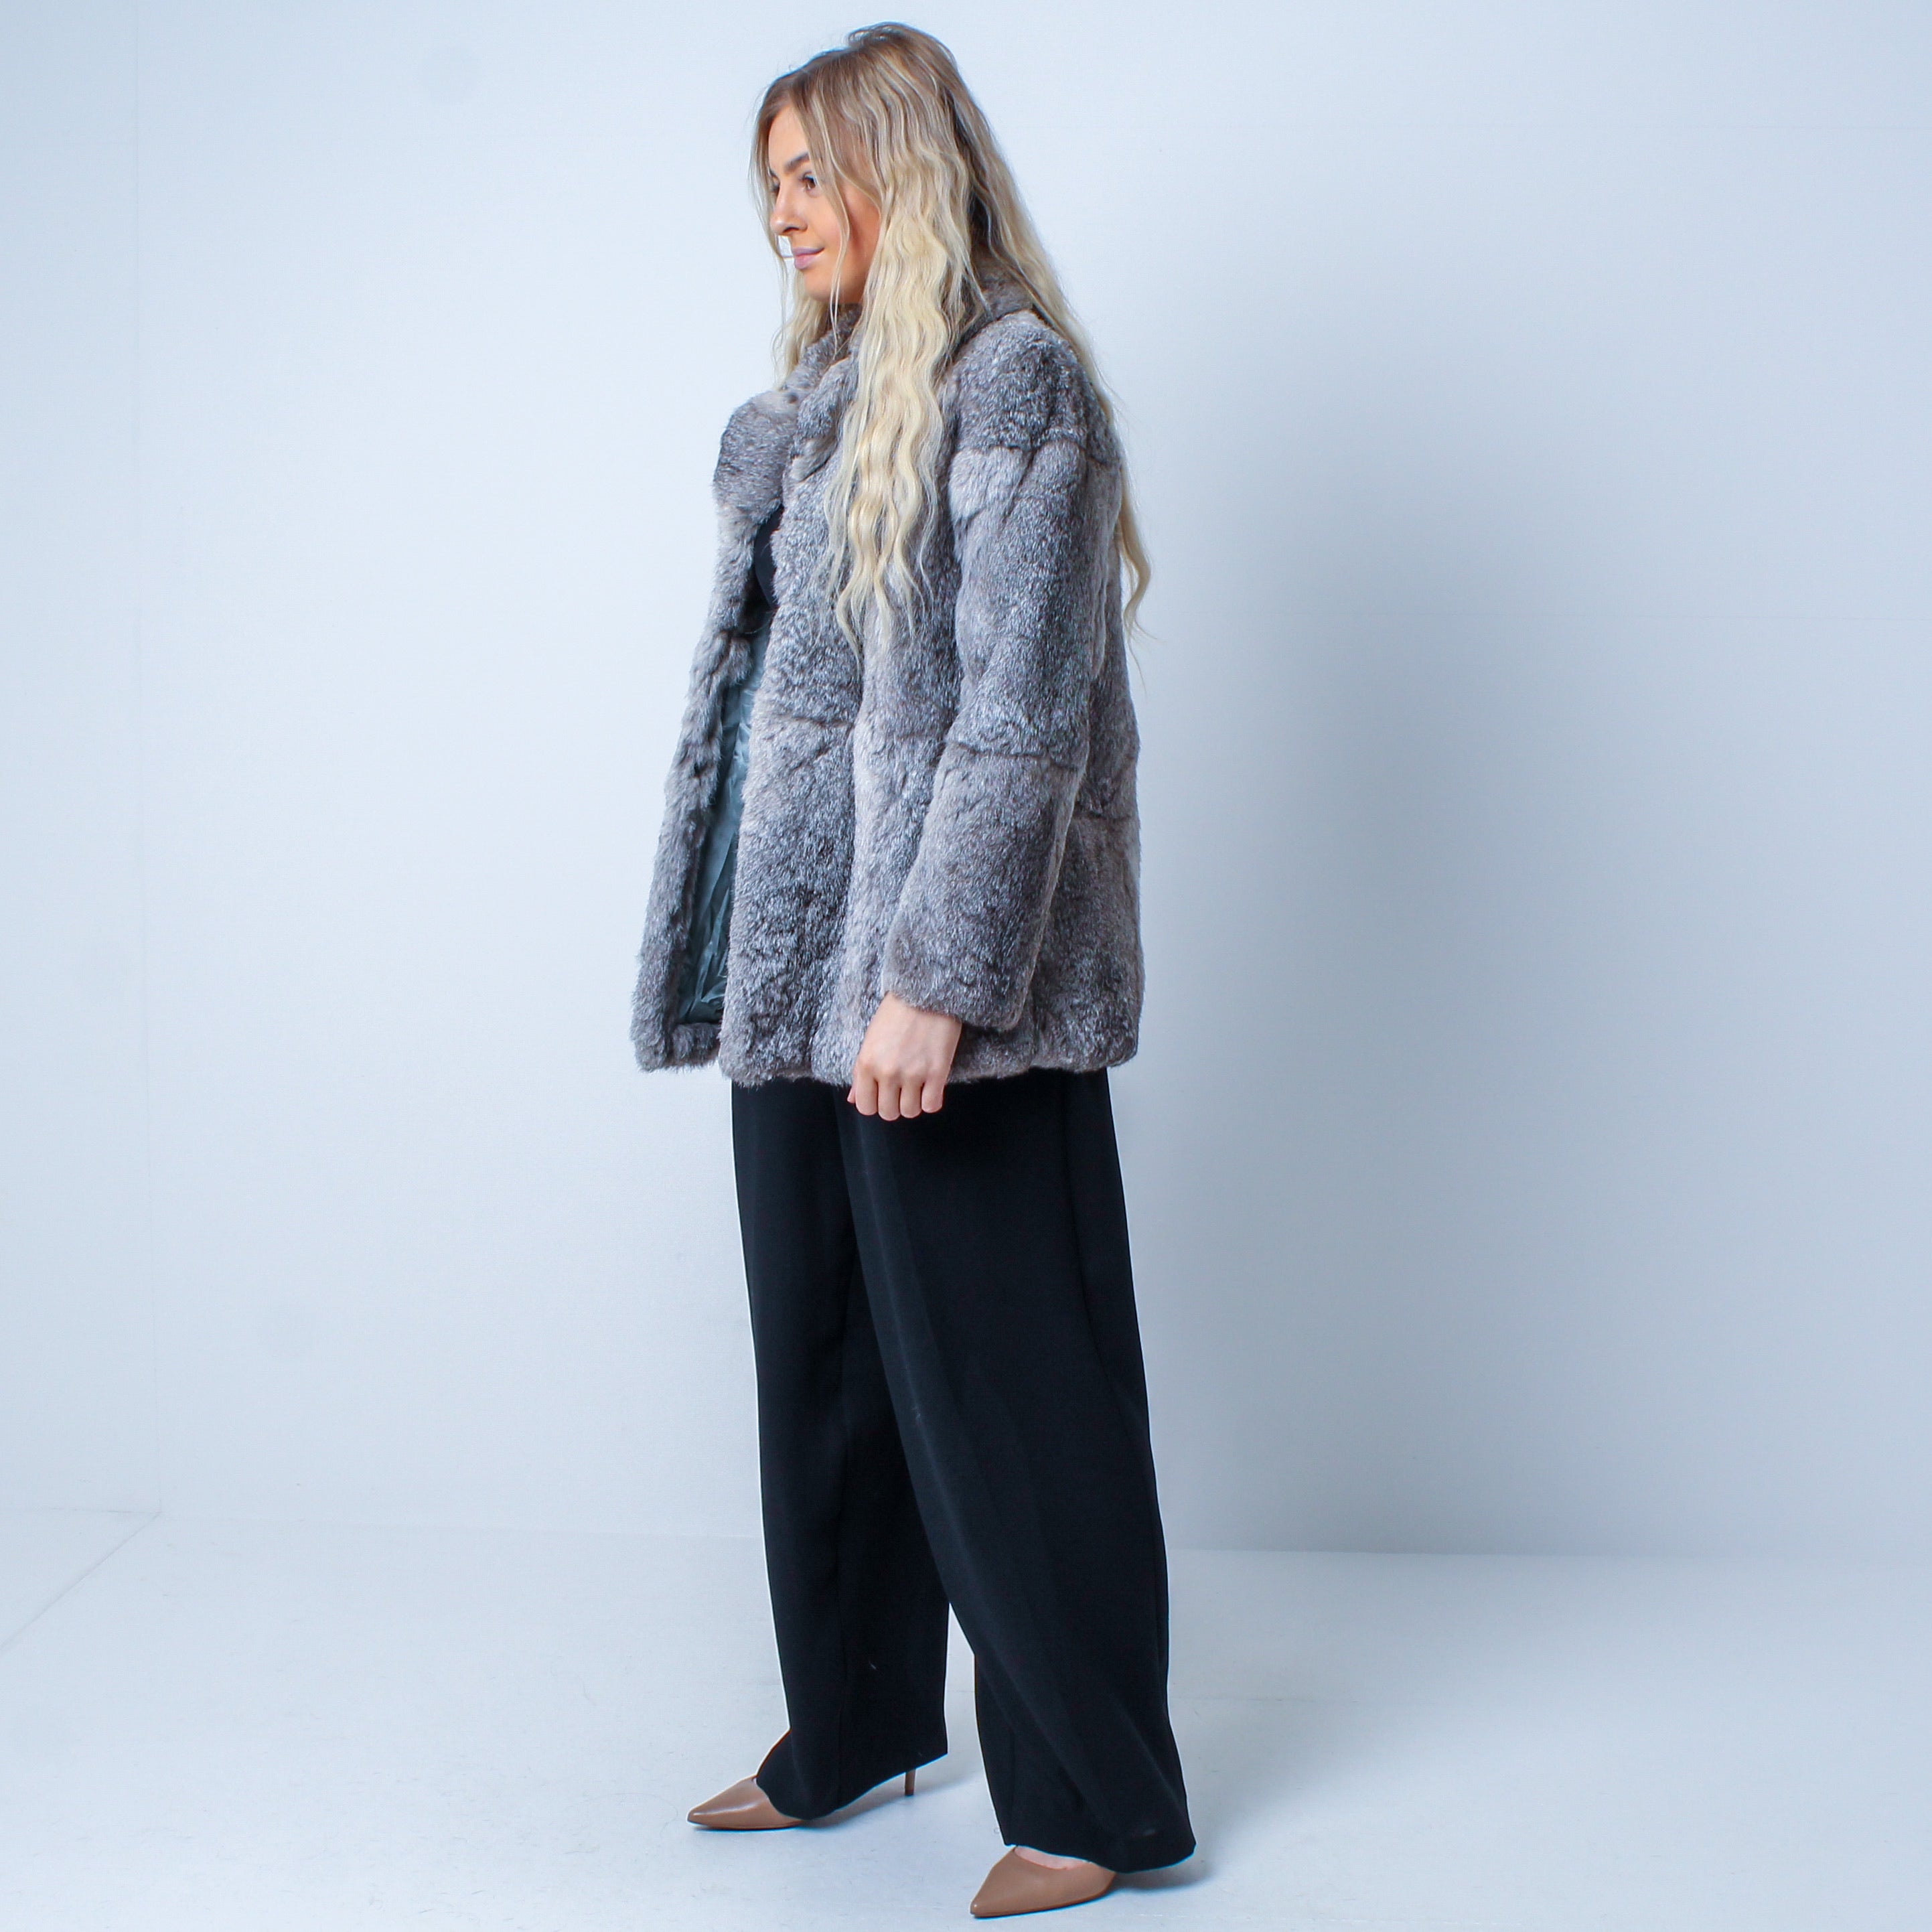 Women’s Vintage Rabbit Fur Coat Size: Small-Medium UK 8-12